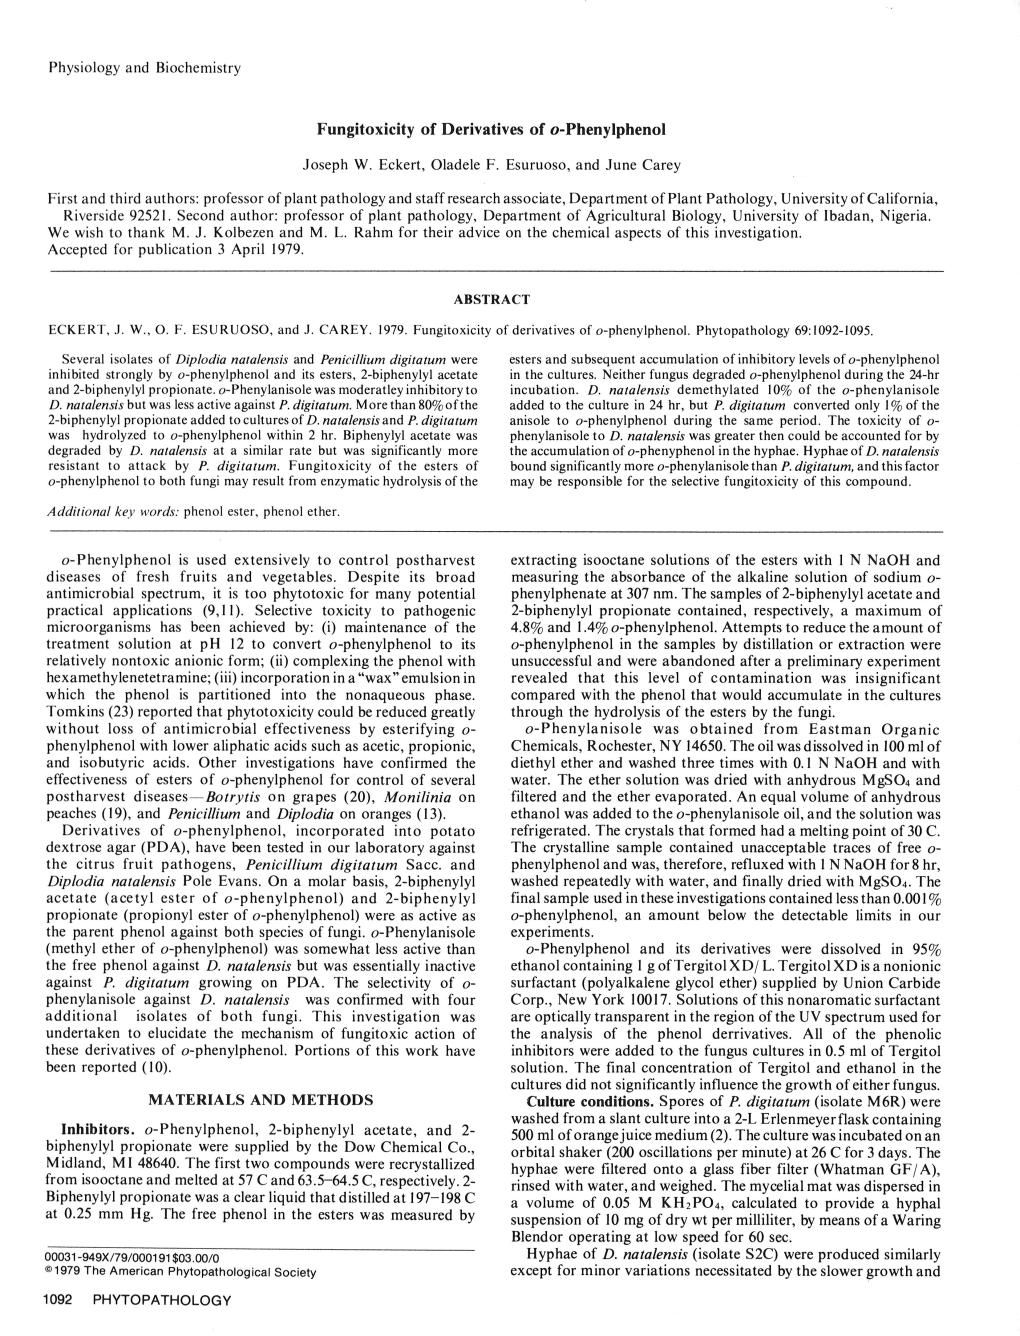 Fungitoxicity of Derivatives of O-Phenylphenol